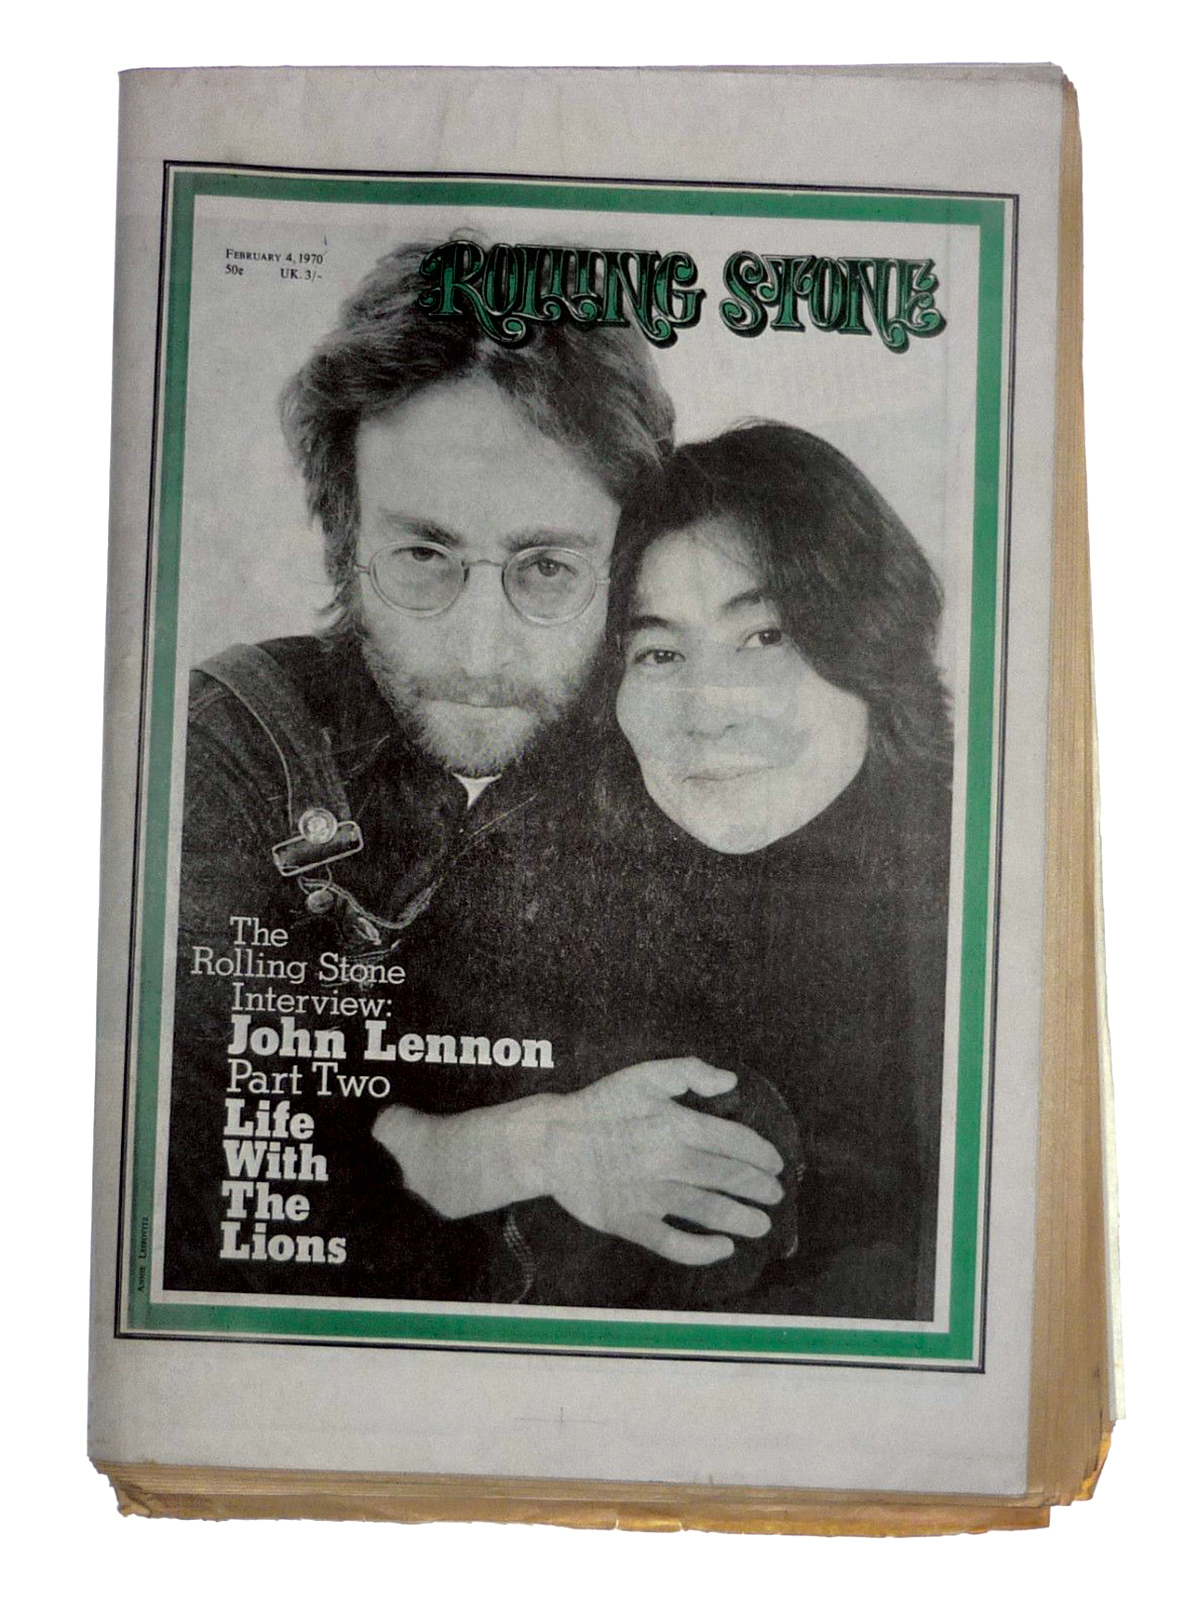 Rolling-Stone-Magazine-No-75-February-4-1970-John-Lennon-Charles-Reich-Youngbloods-John-Peel-14094-p.jpg